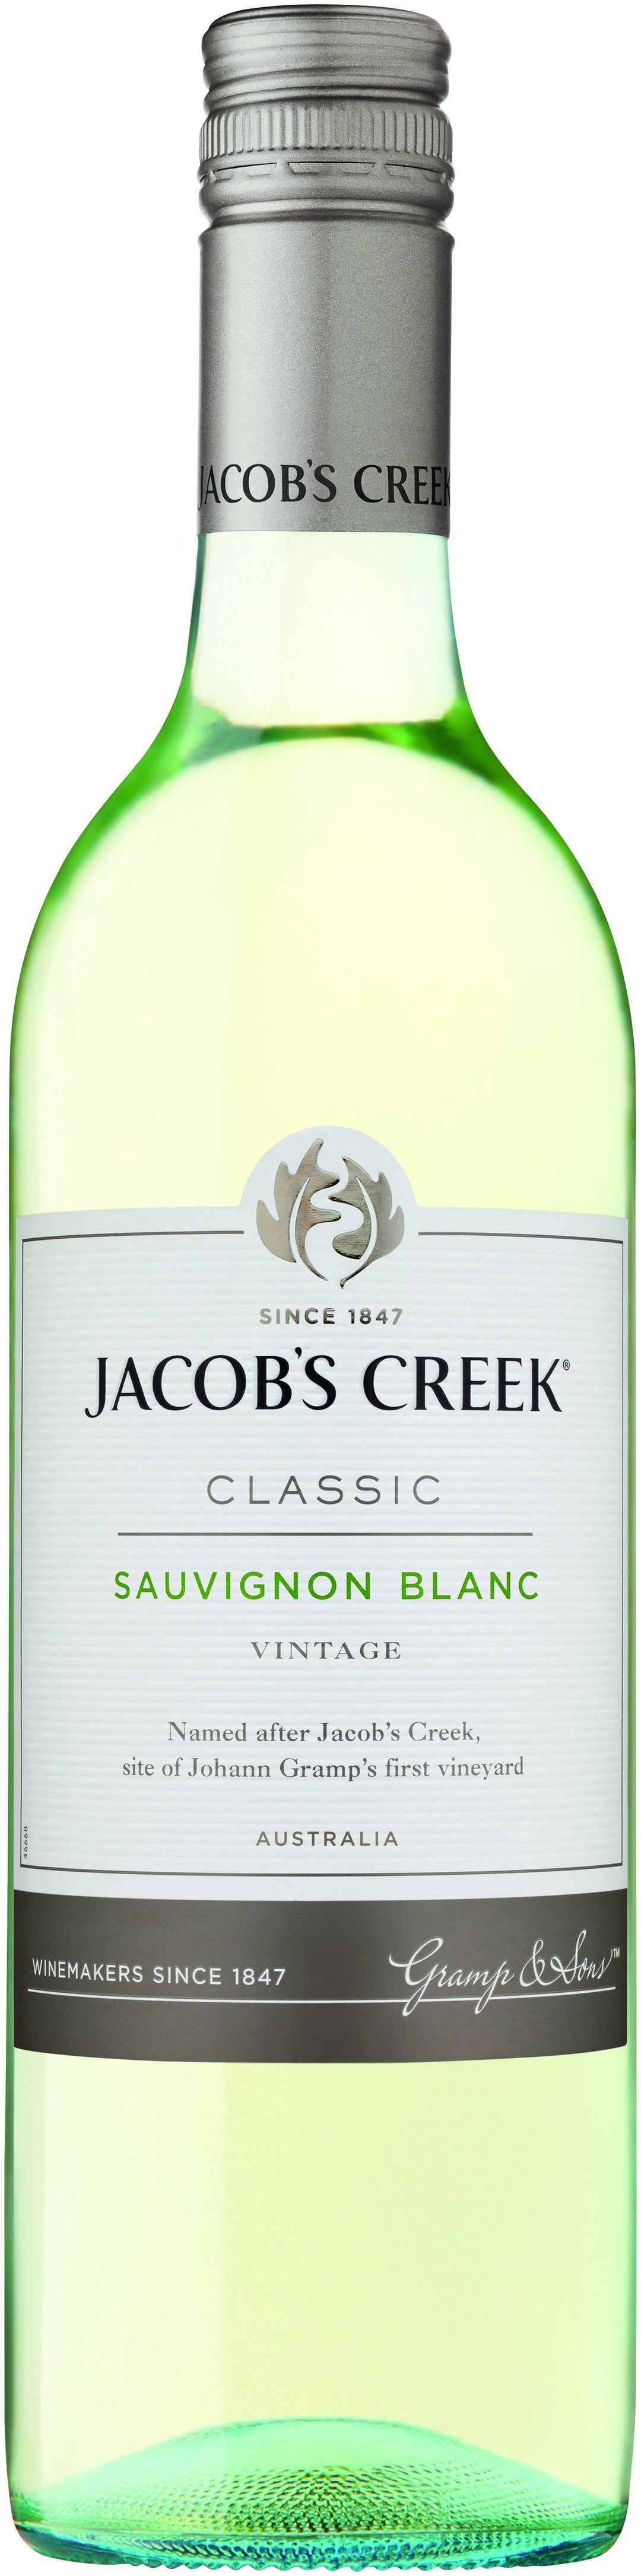 Jacobs Creek Sauv Blanc - Liquor Library